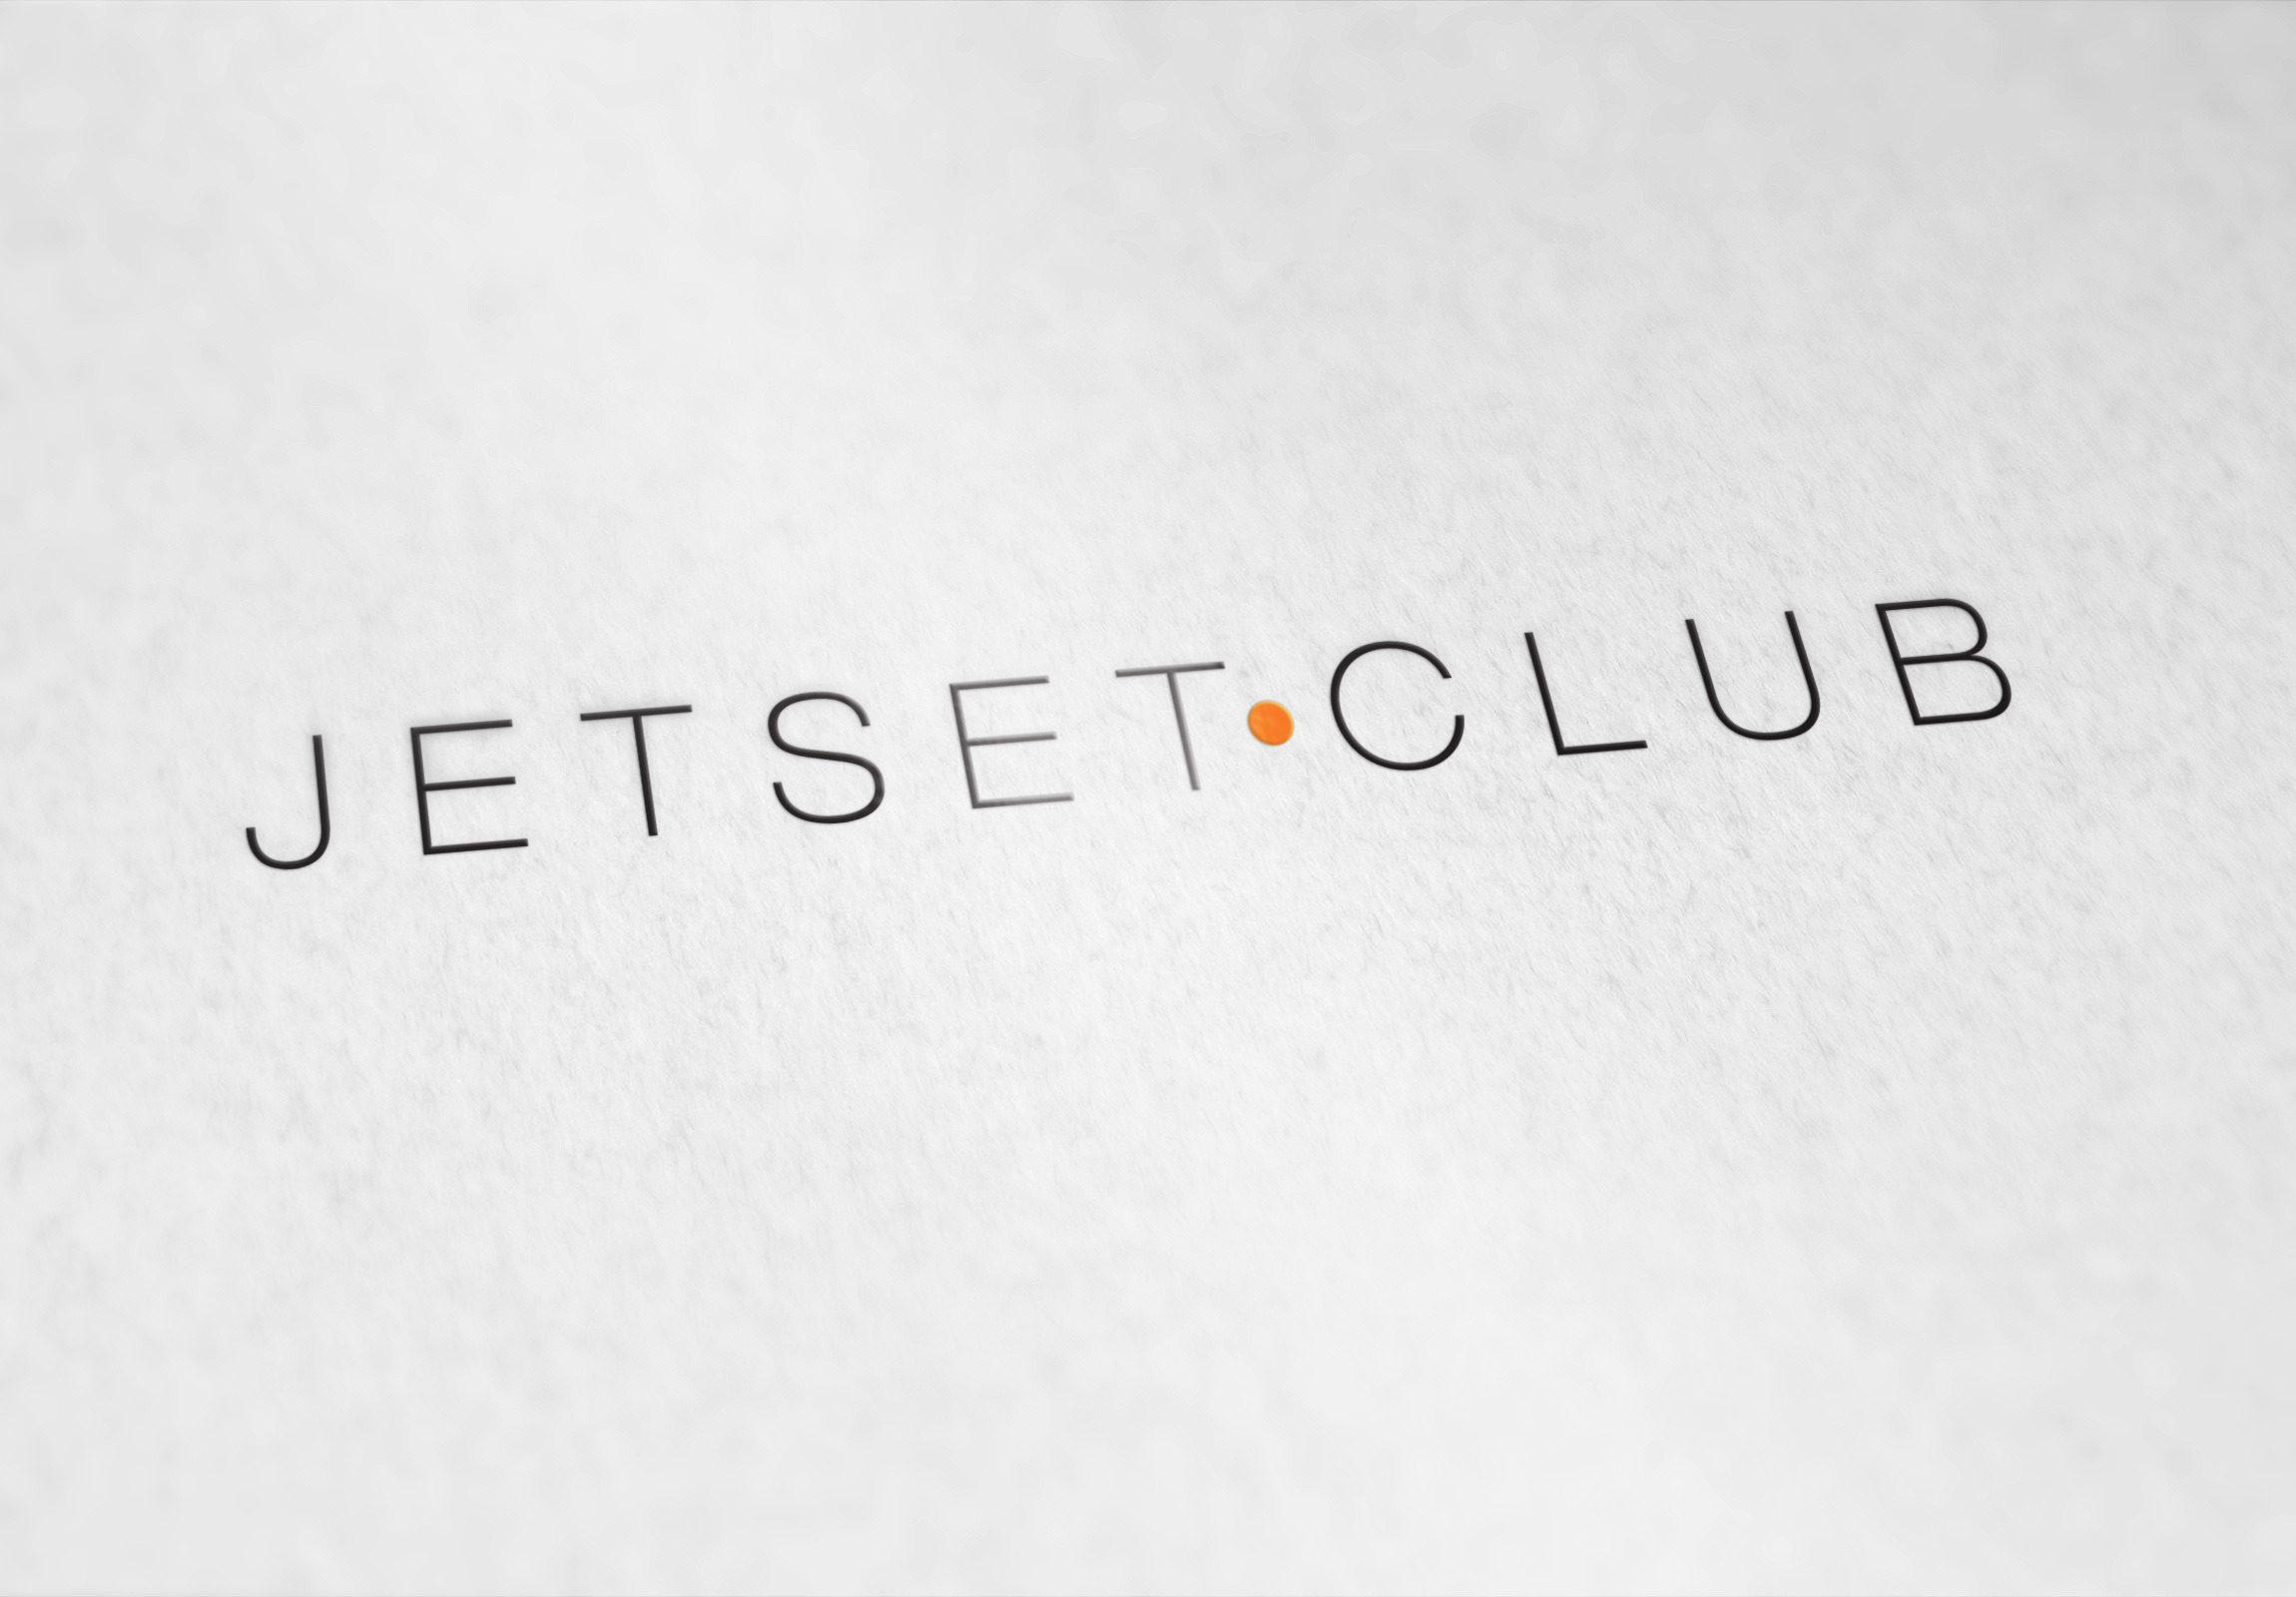 Jetset Club